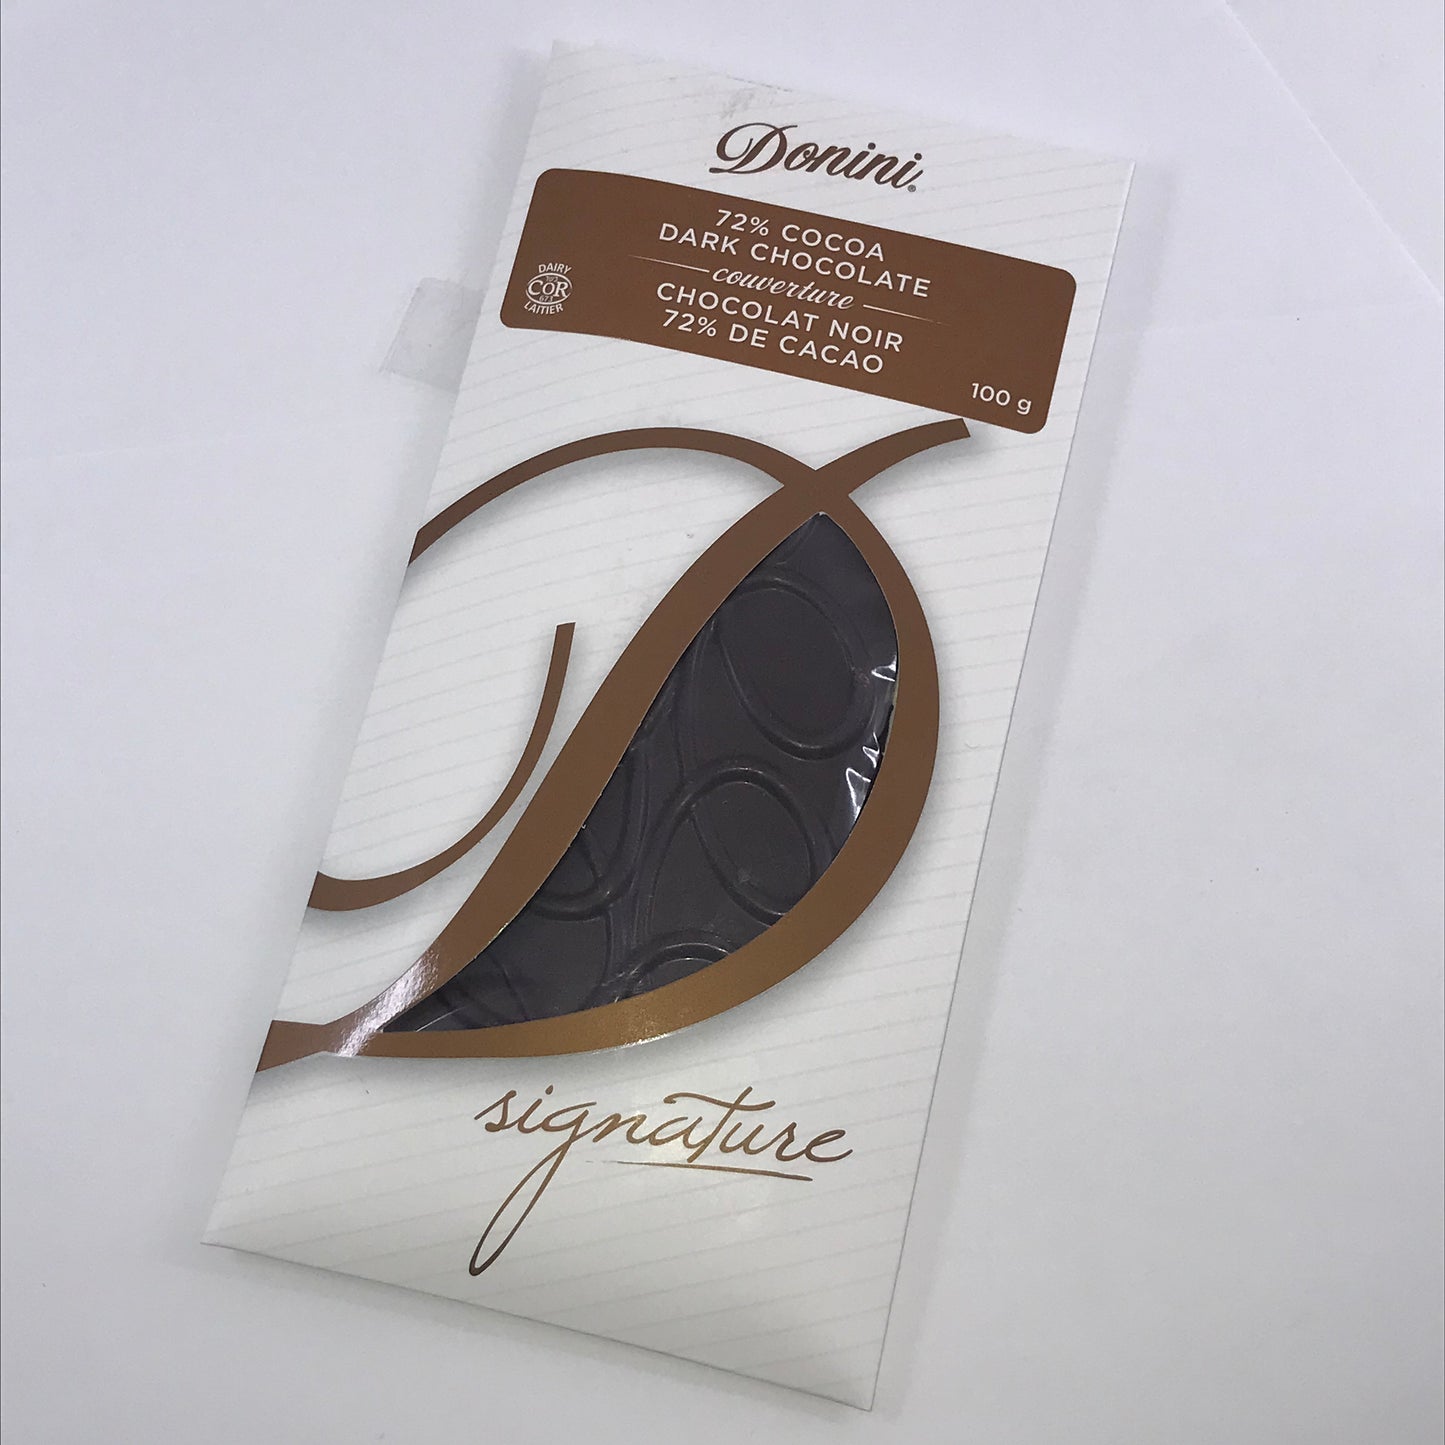 Donini Chocolate- Signature Series